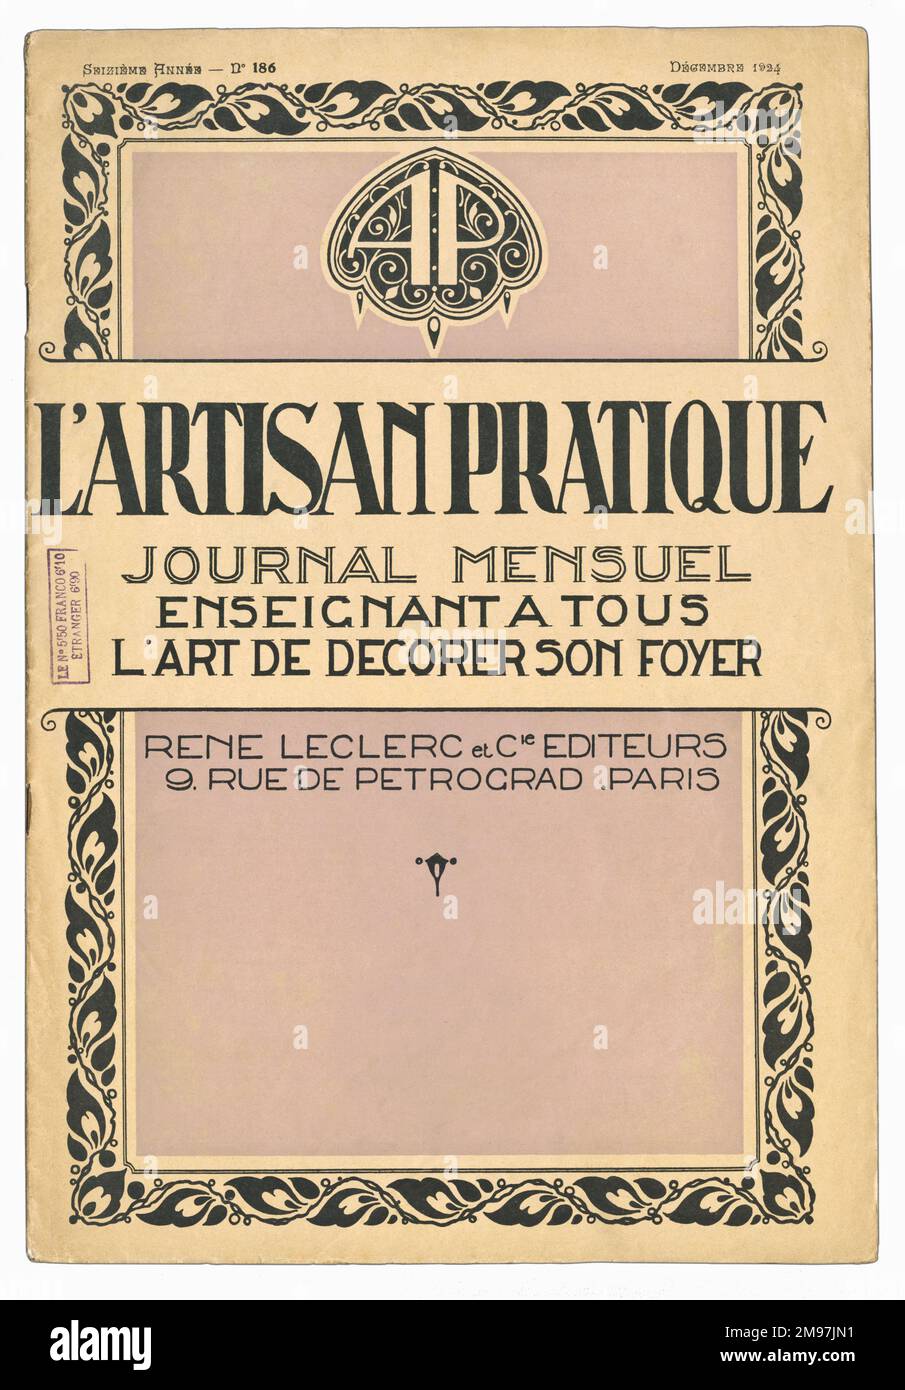 Copertina per una rivista francese d'arte decorativa, l'Artisan Pratique, dicembre 1924. Foto Stock